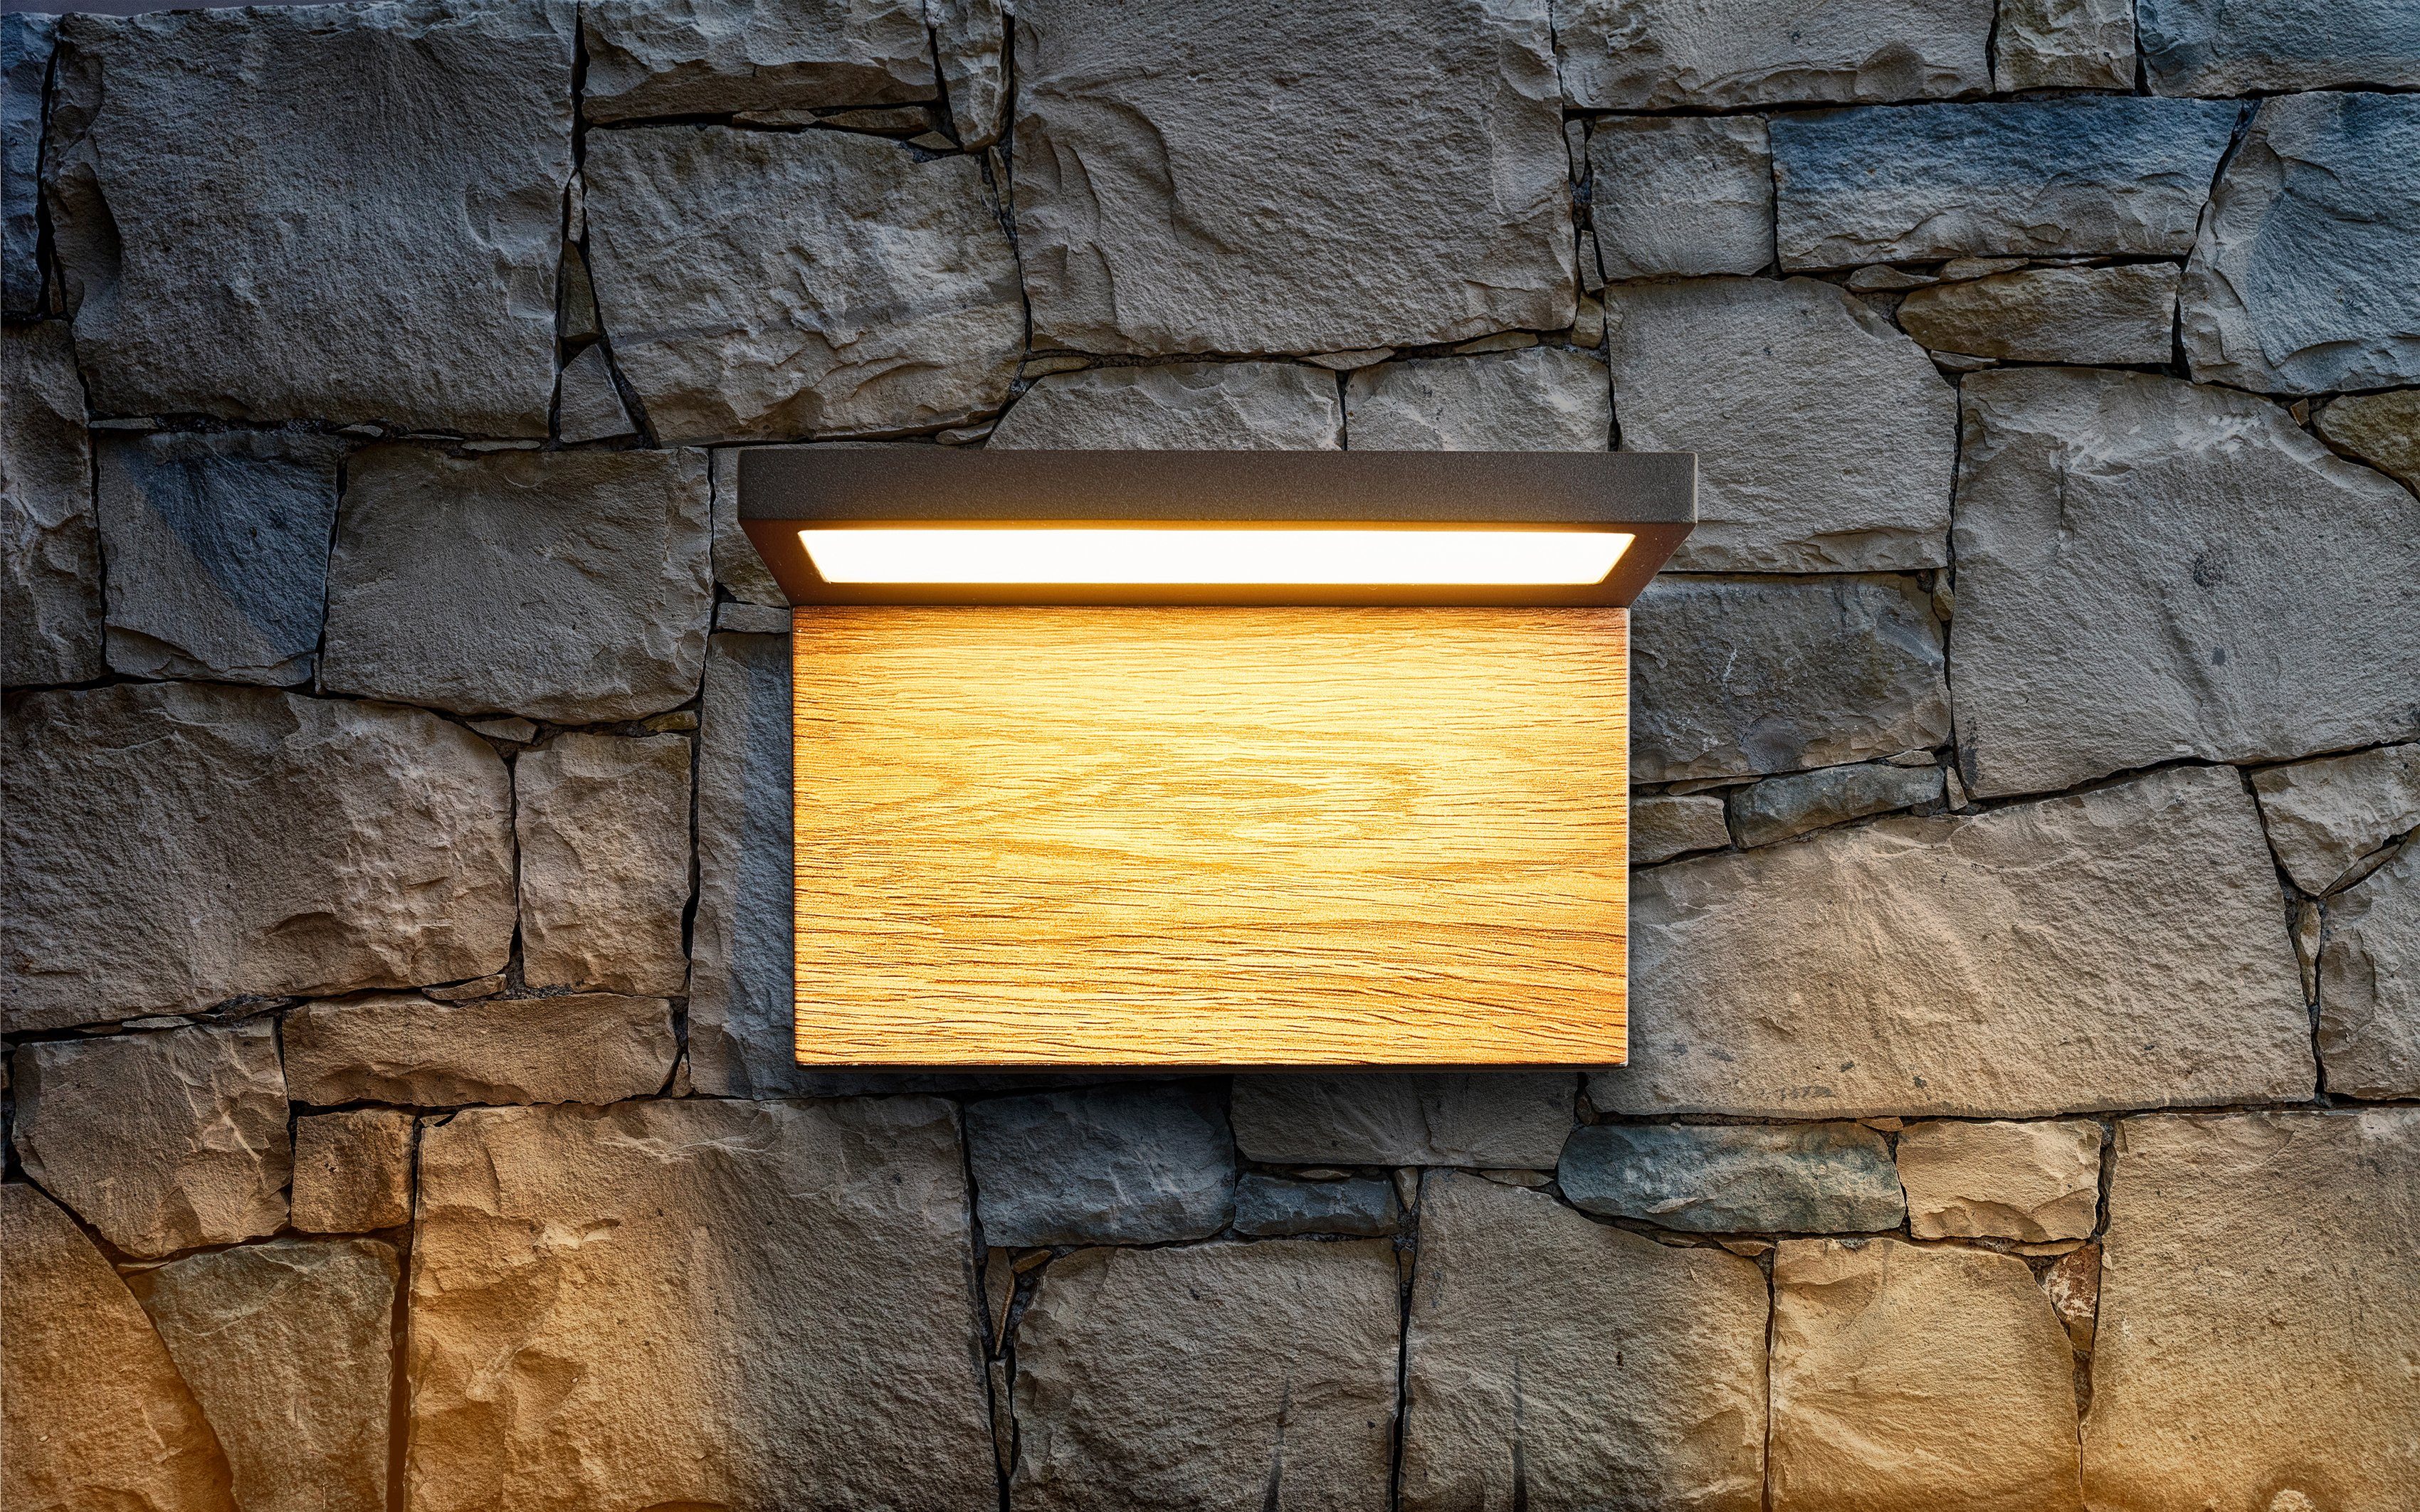 Holzdekor, fest HEITRONIC LED Außenleuchte integriert, Wandlampe, Warmweiß, Außenlampe, LED Wandleuchte Manao,